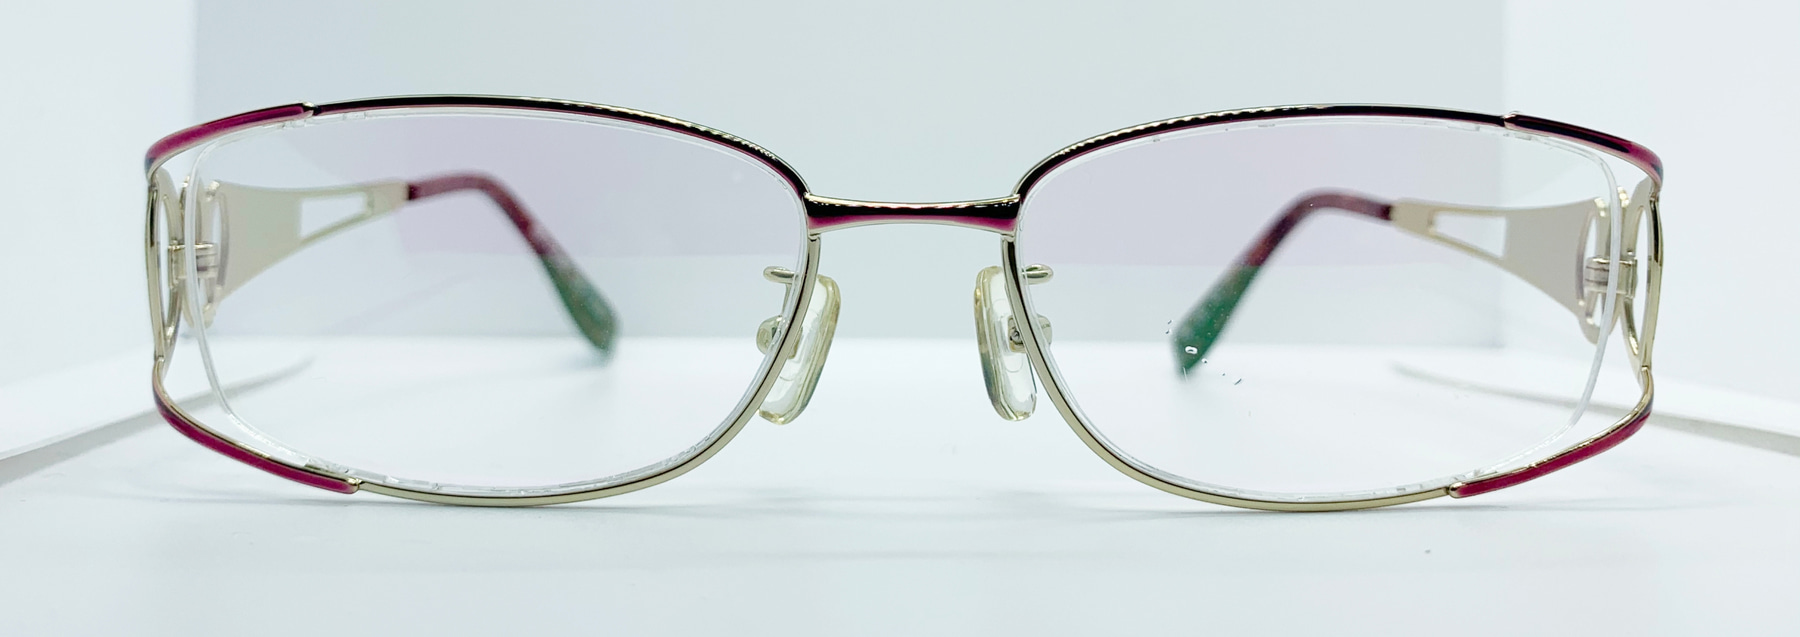 MINIHOUSE M-1037, Korean glasses, sunglasses, eyeglasses, glasses